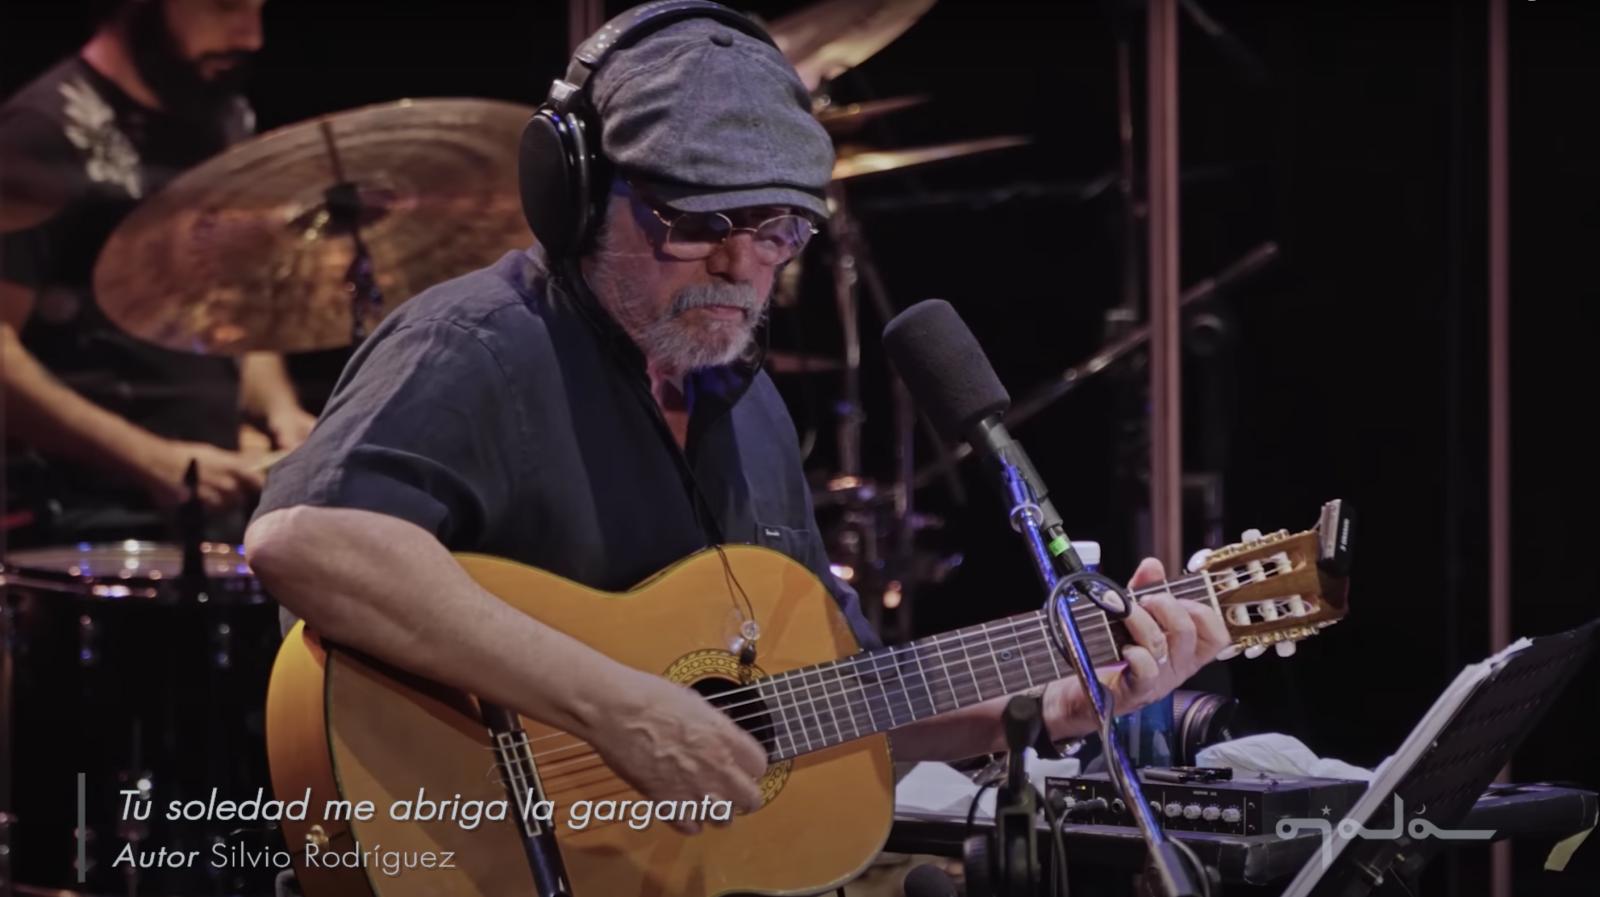 "Tu soledad me abriga la garganta". Song from Silvio Rodriguez concert.